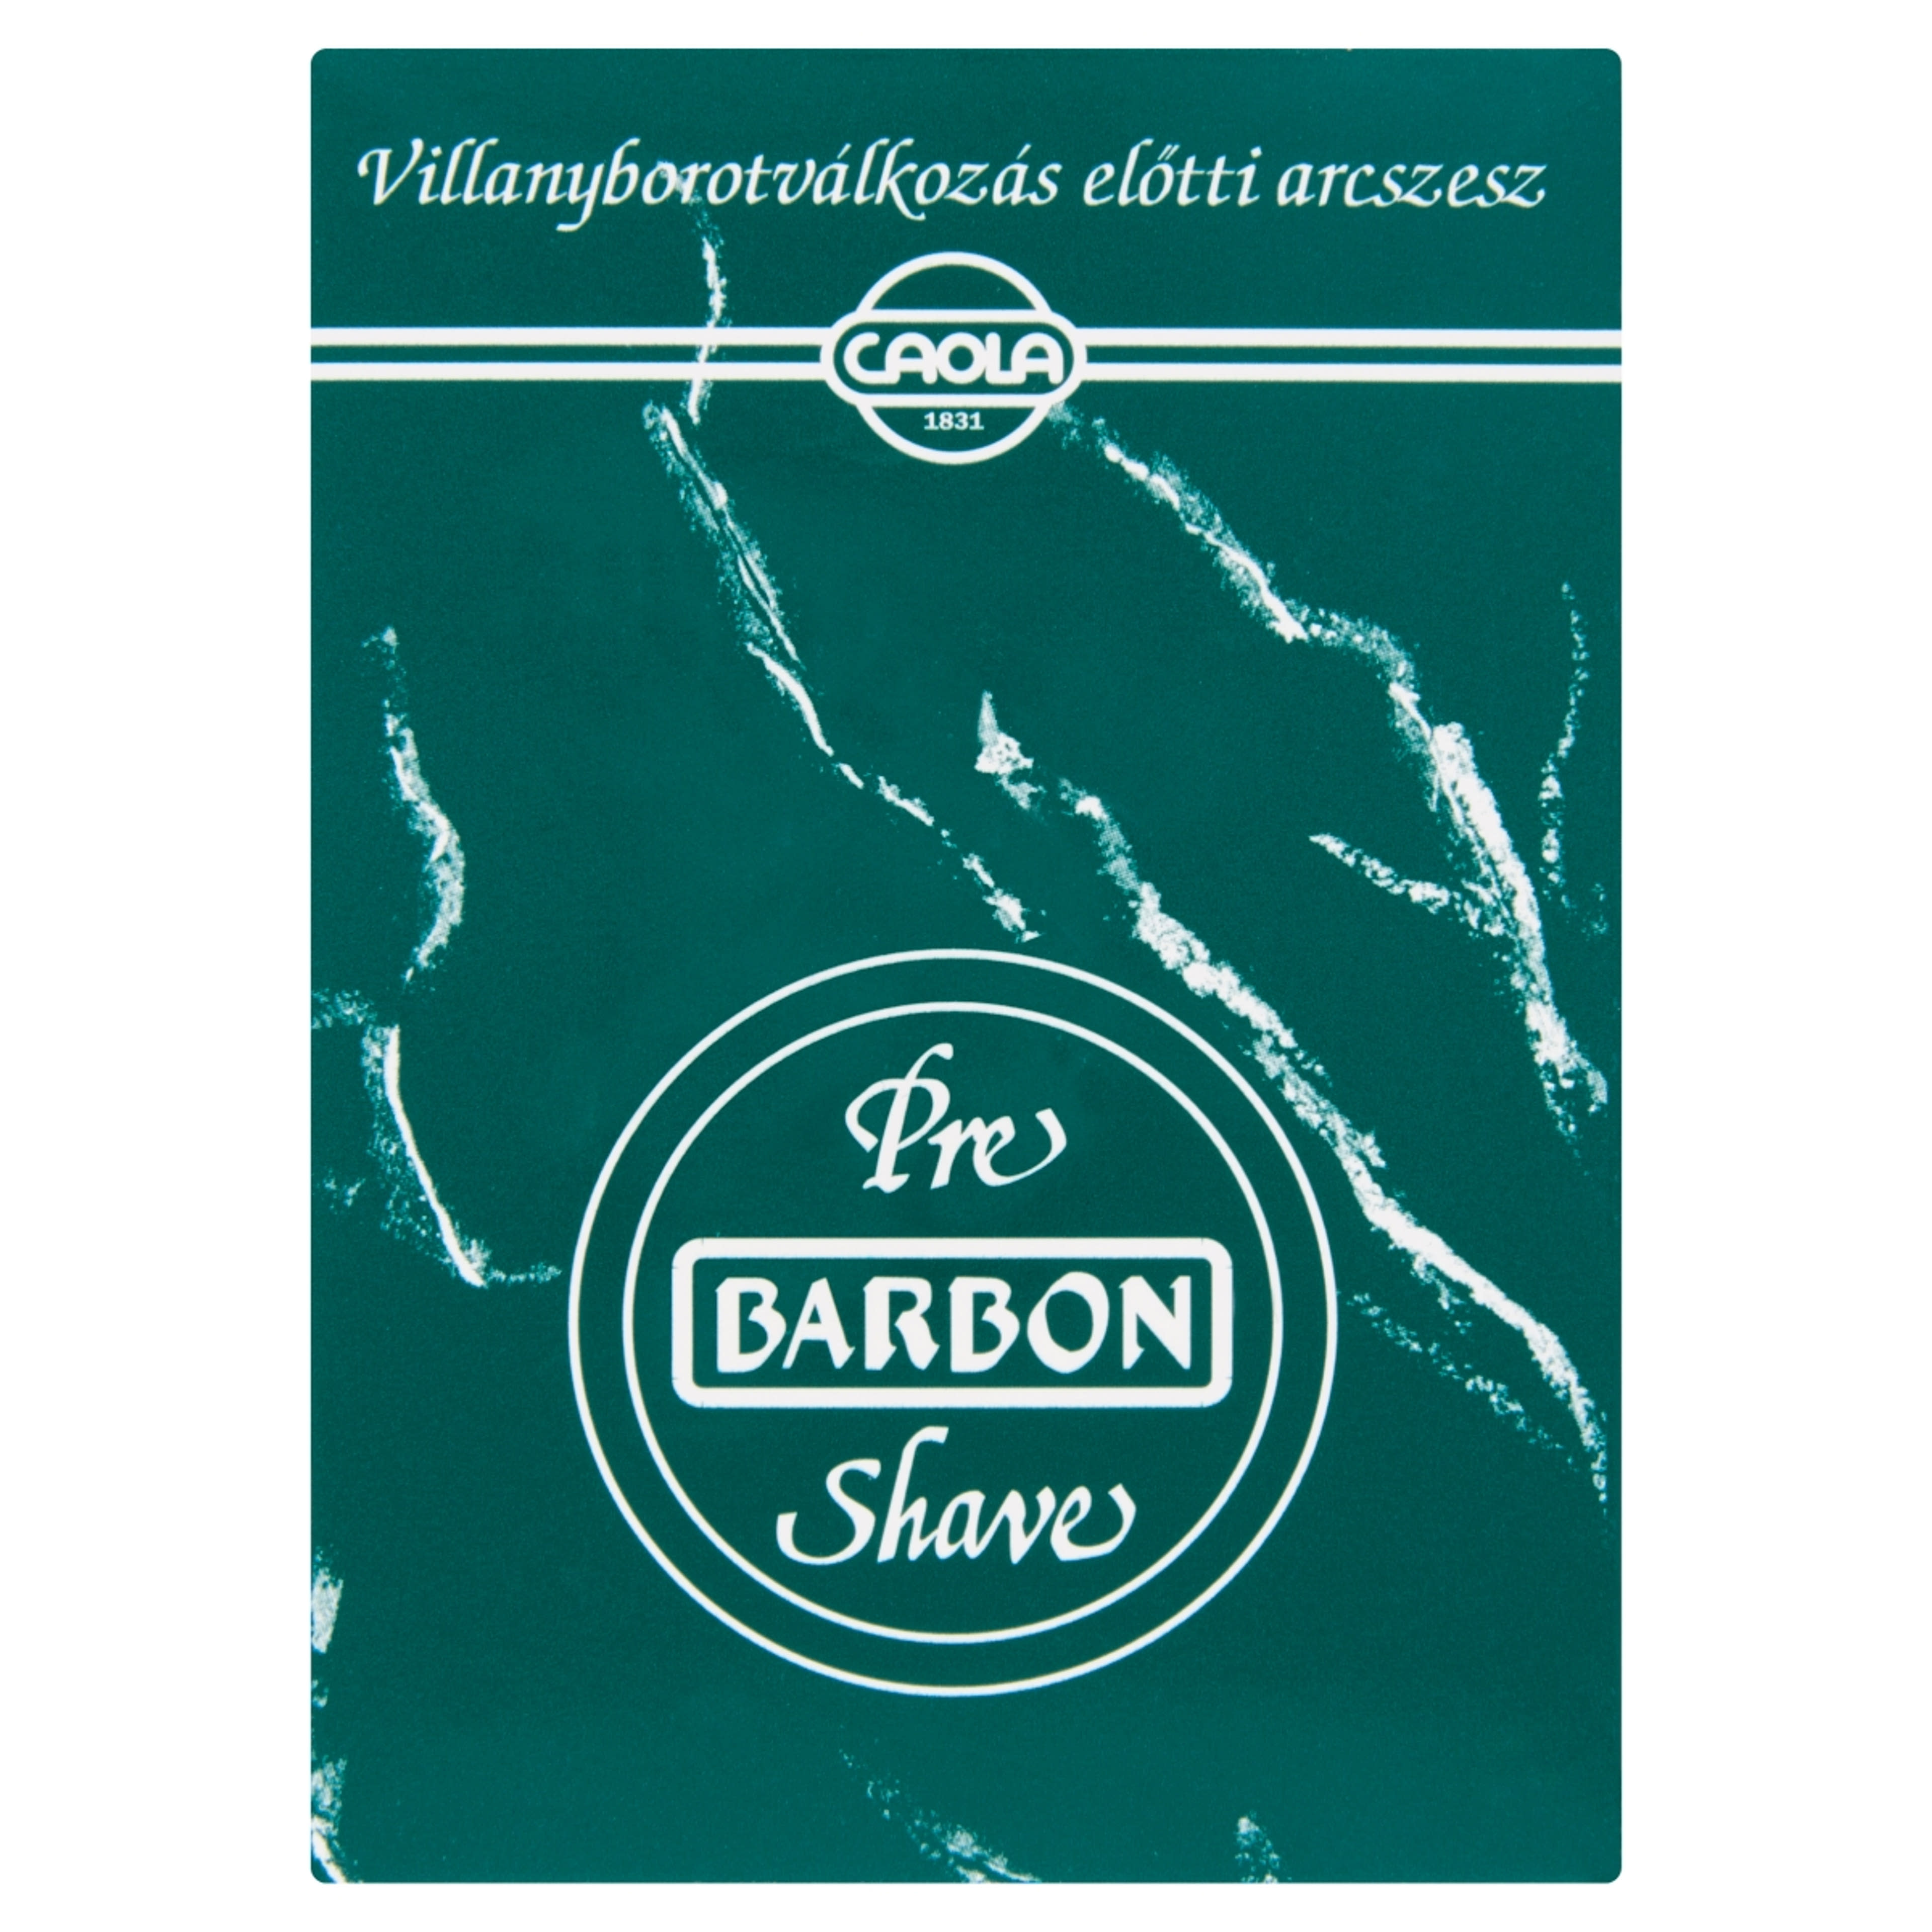 Barbon pre shave - 100 ml-1